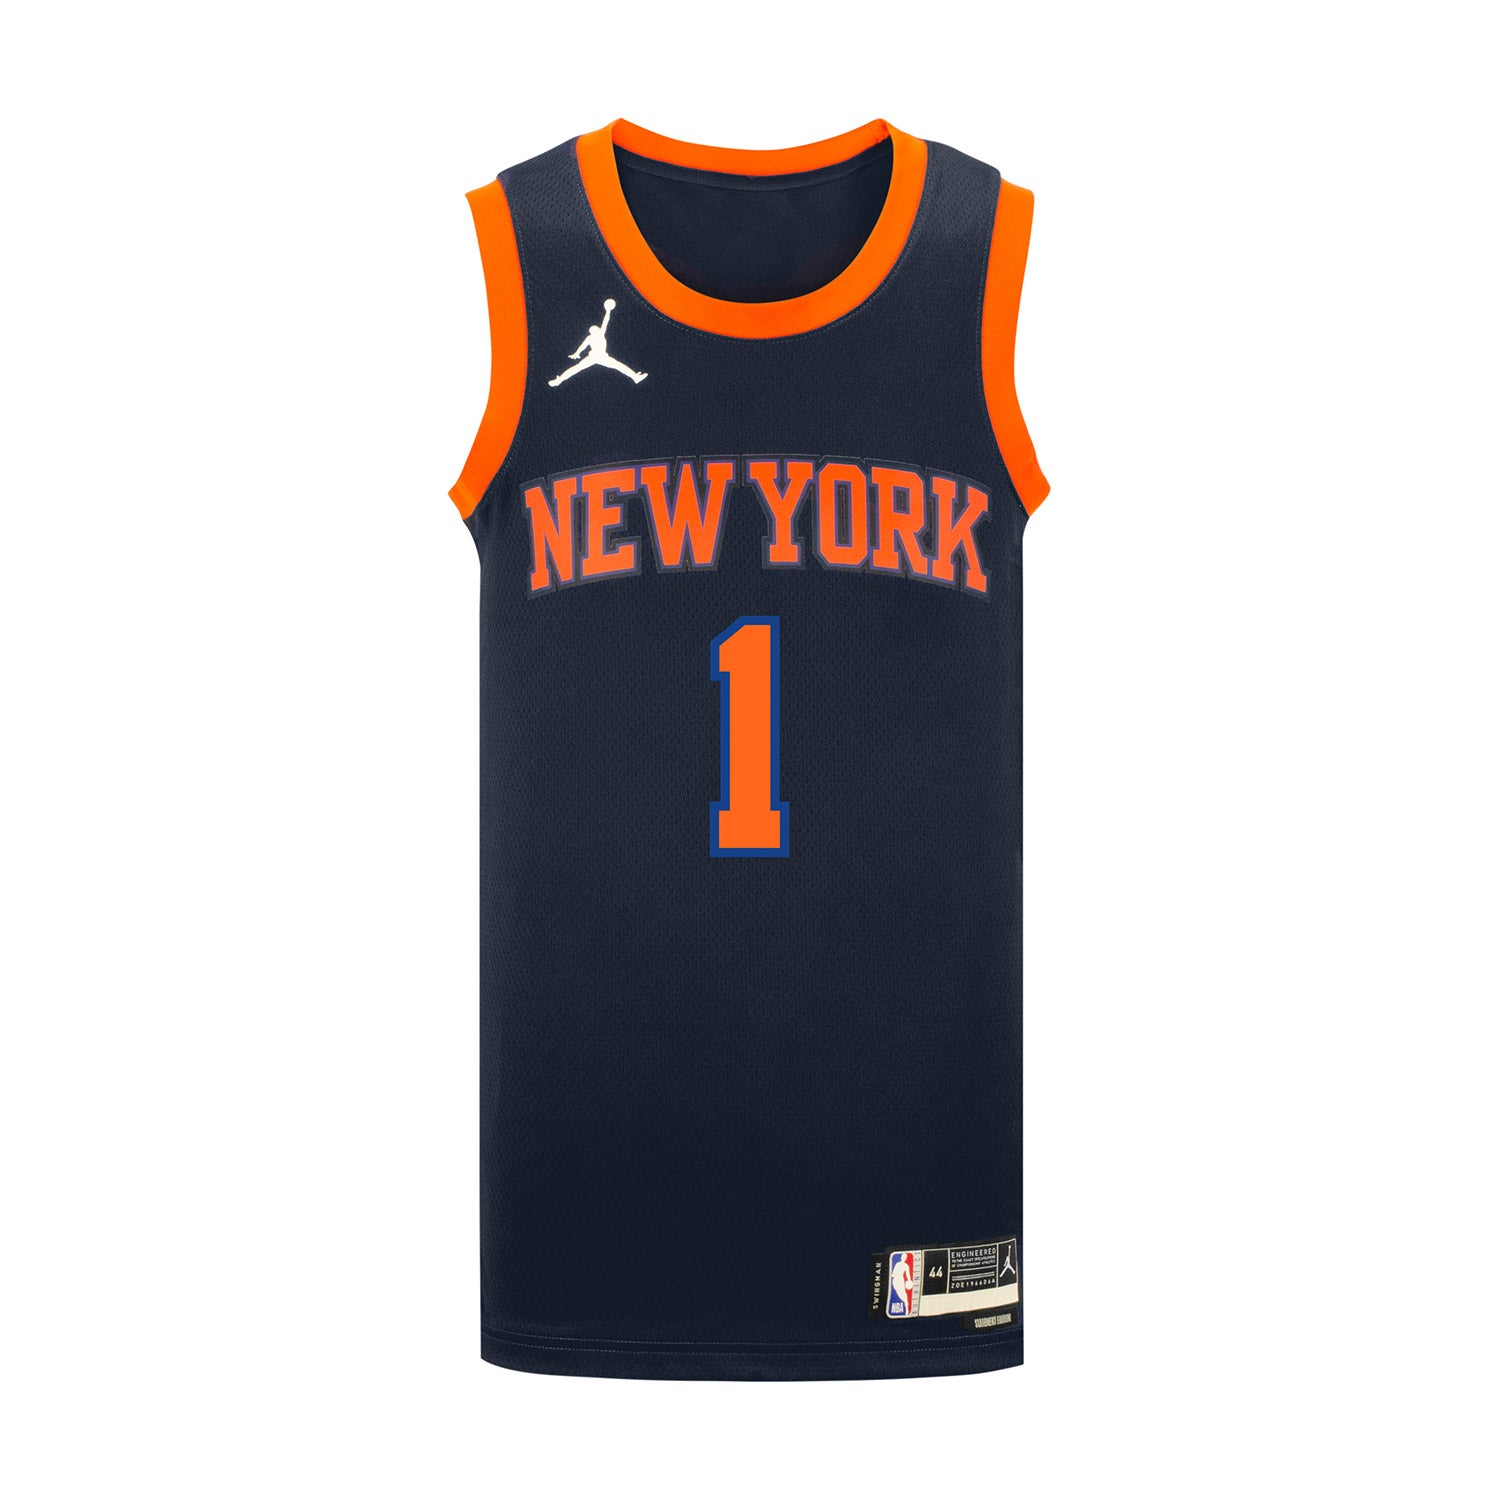 Knicks style – upperupper